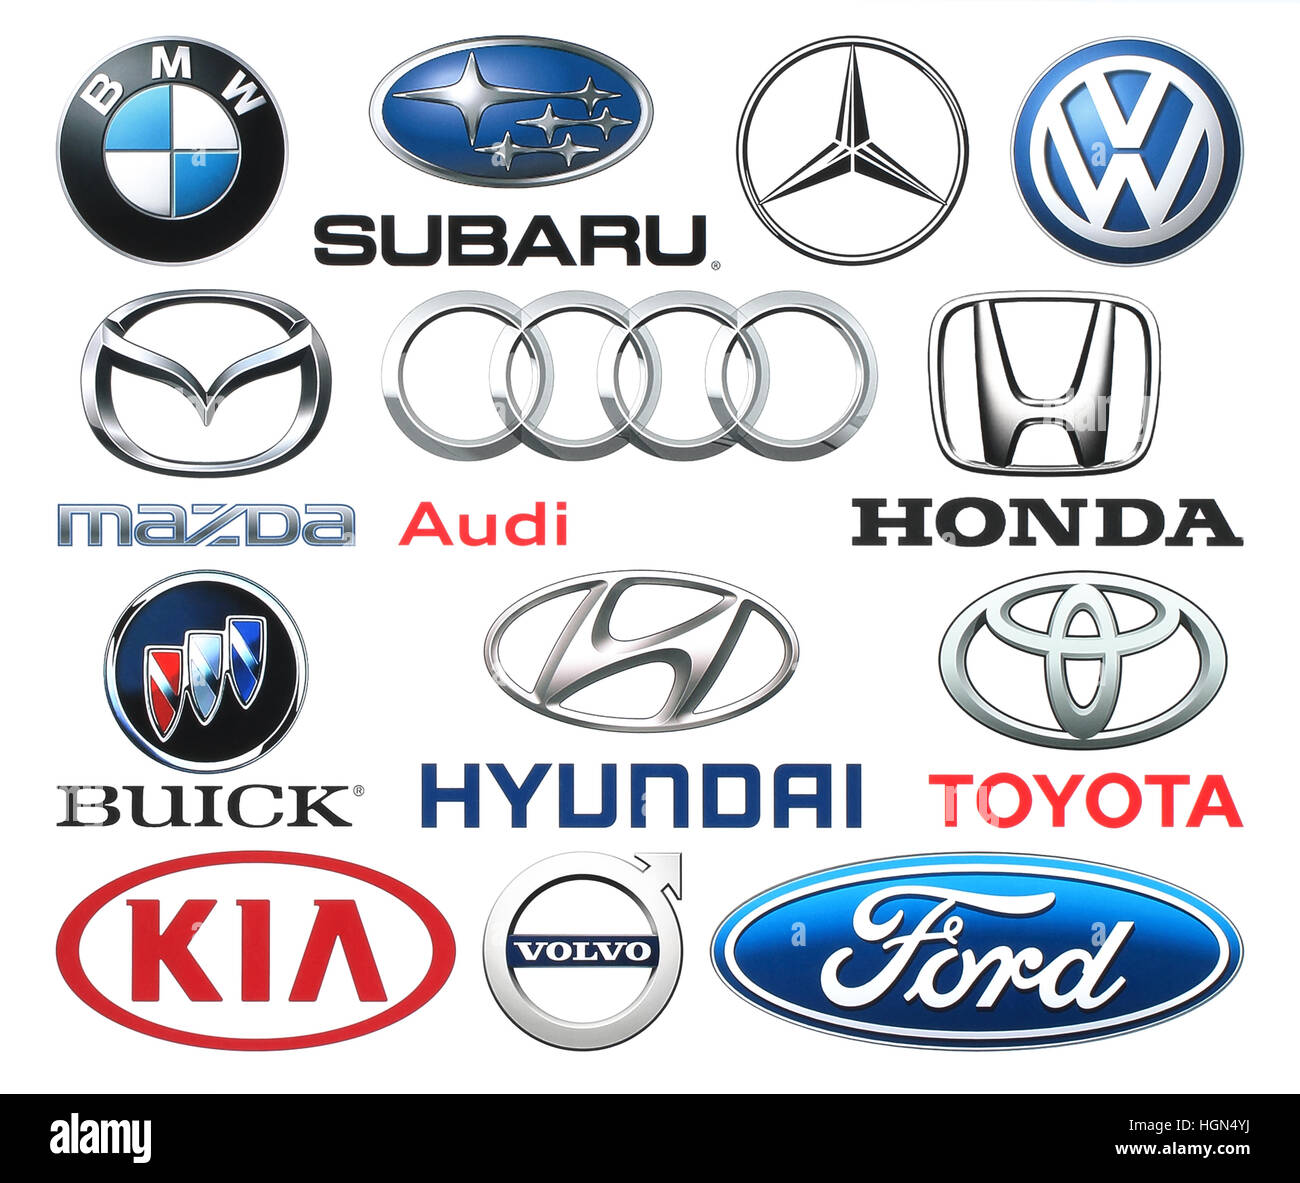 Hyundai car logo -Fotos und -Bildmaterial in hoher Auflösung – Alamy